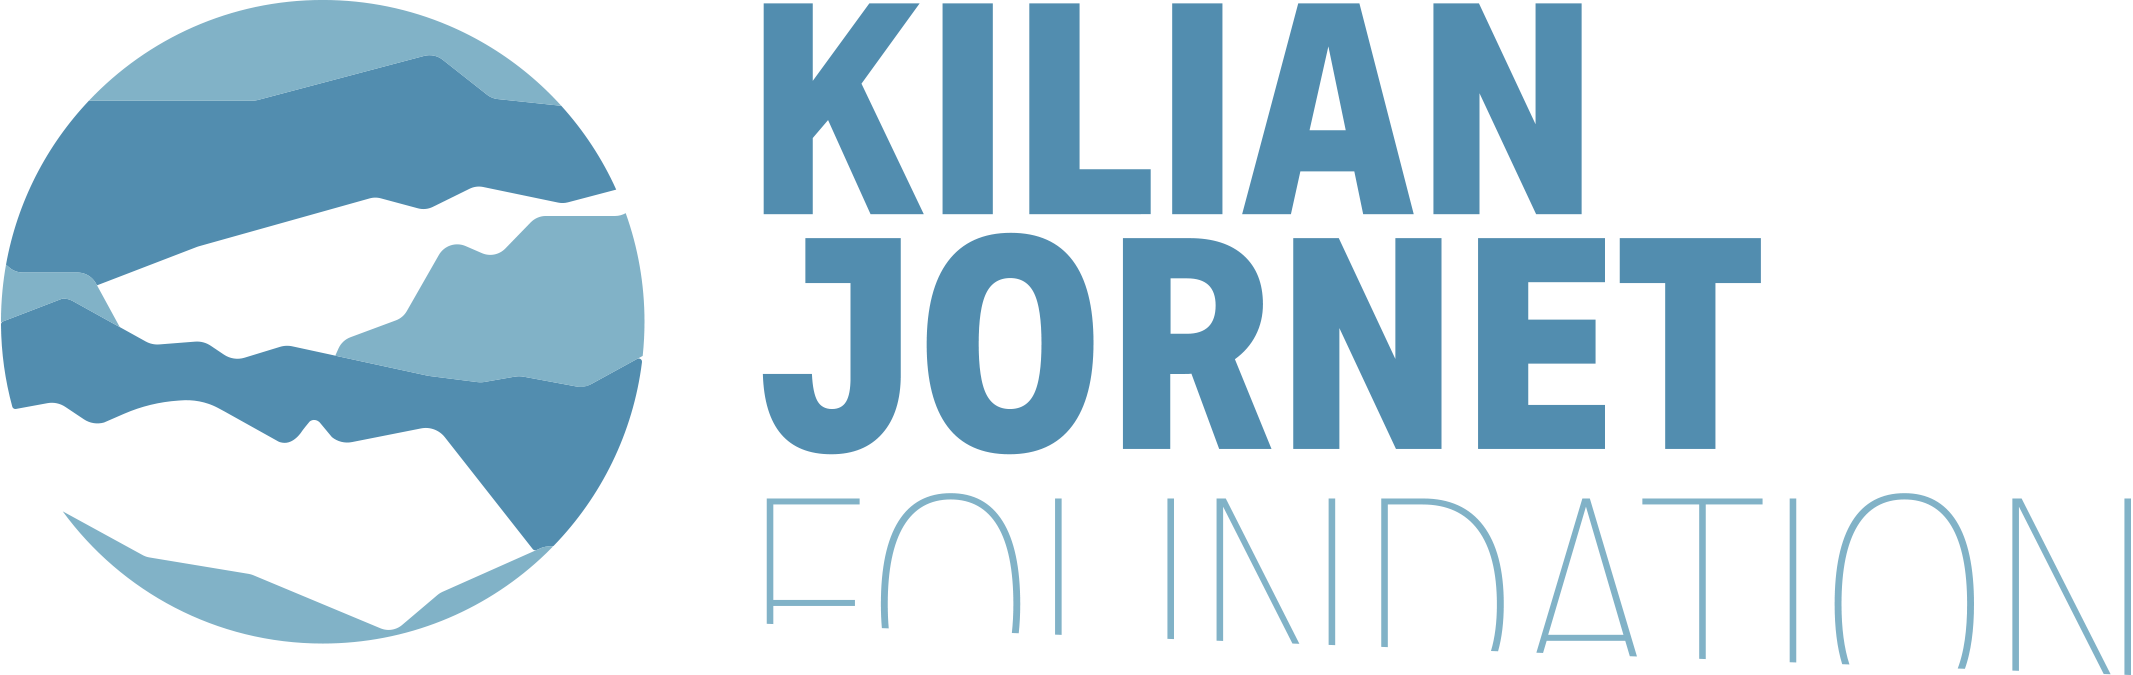 Kilian Jornet Foundation